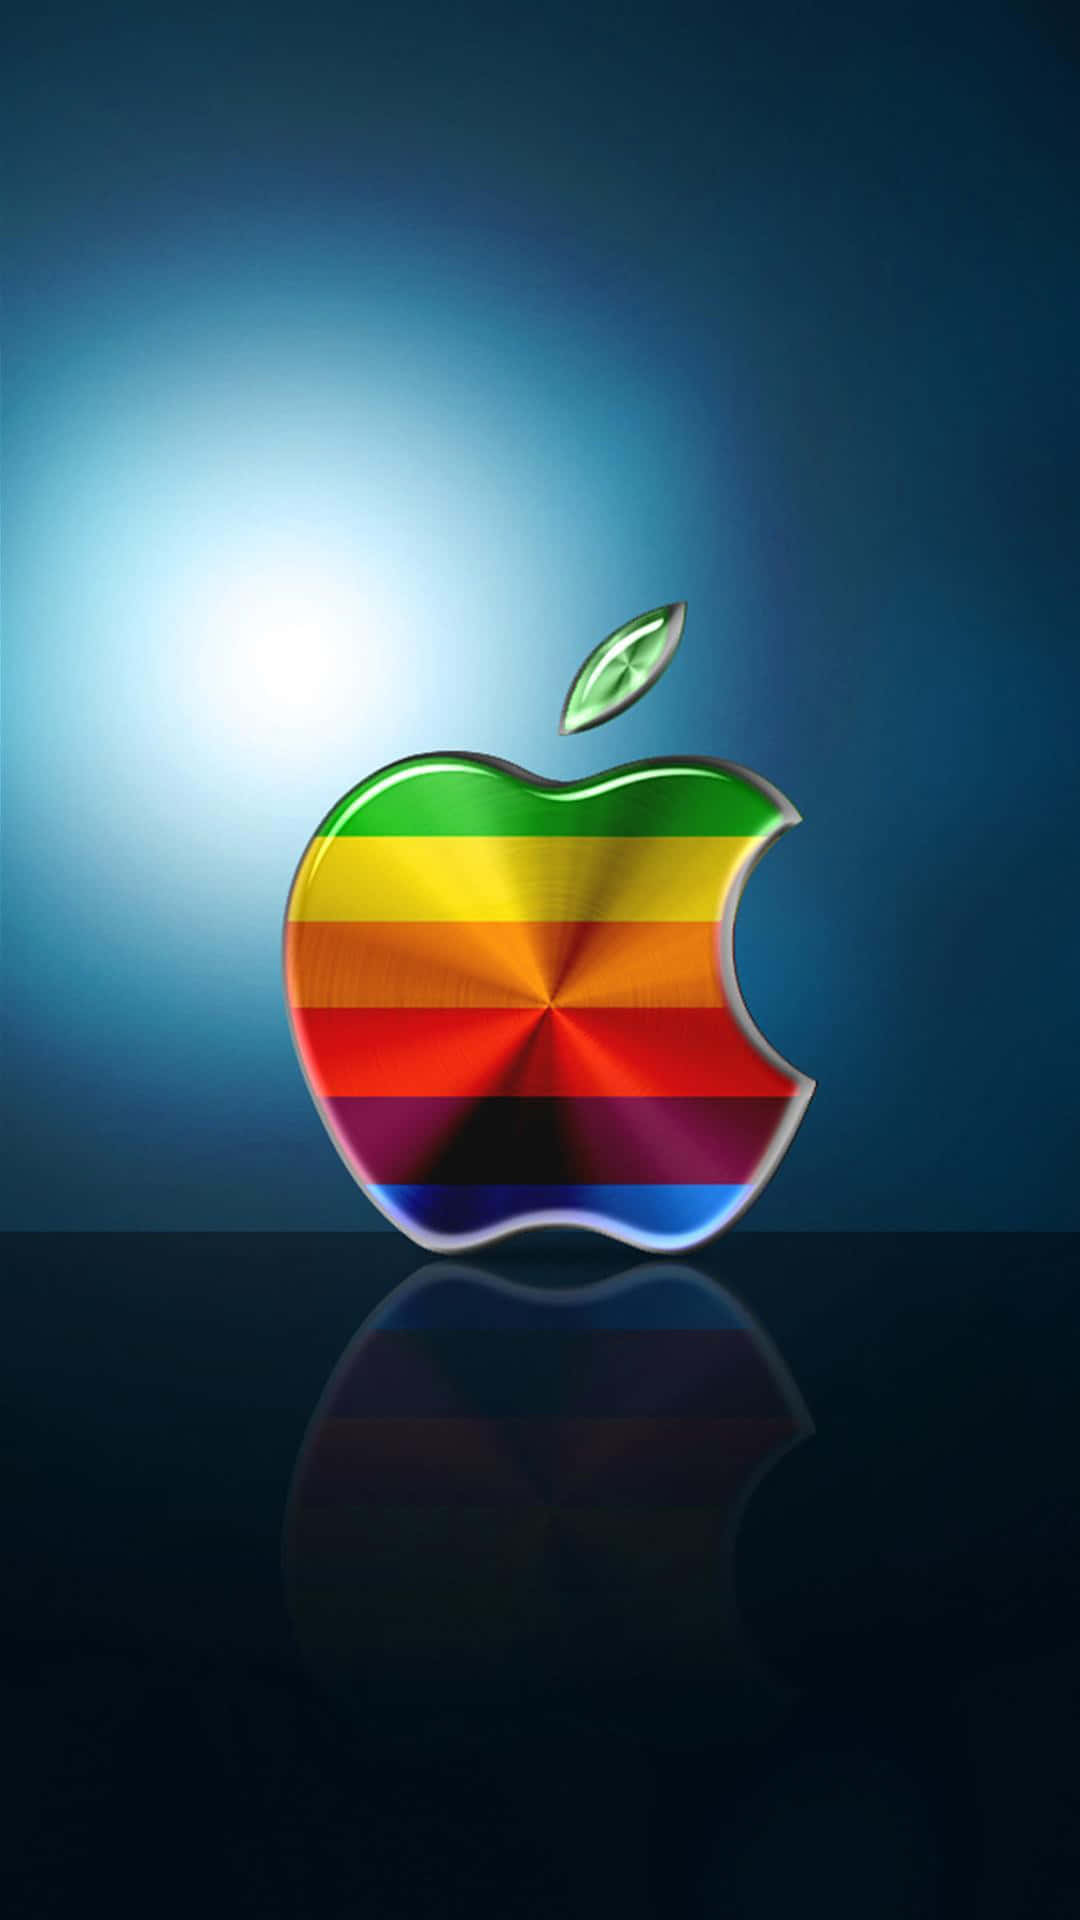 Färggladaränder 3d-logotypen Amazing Apple Hd Iphone Wallpaper